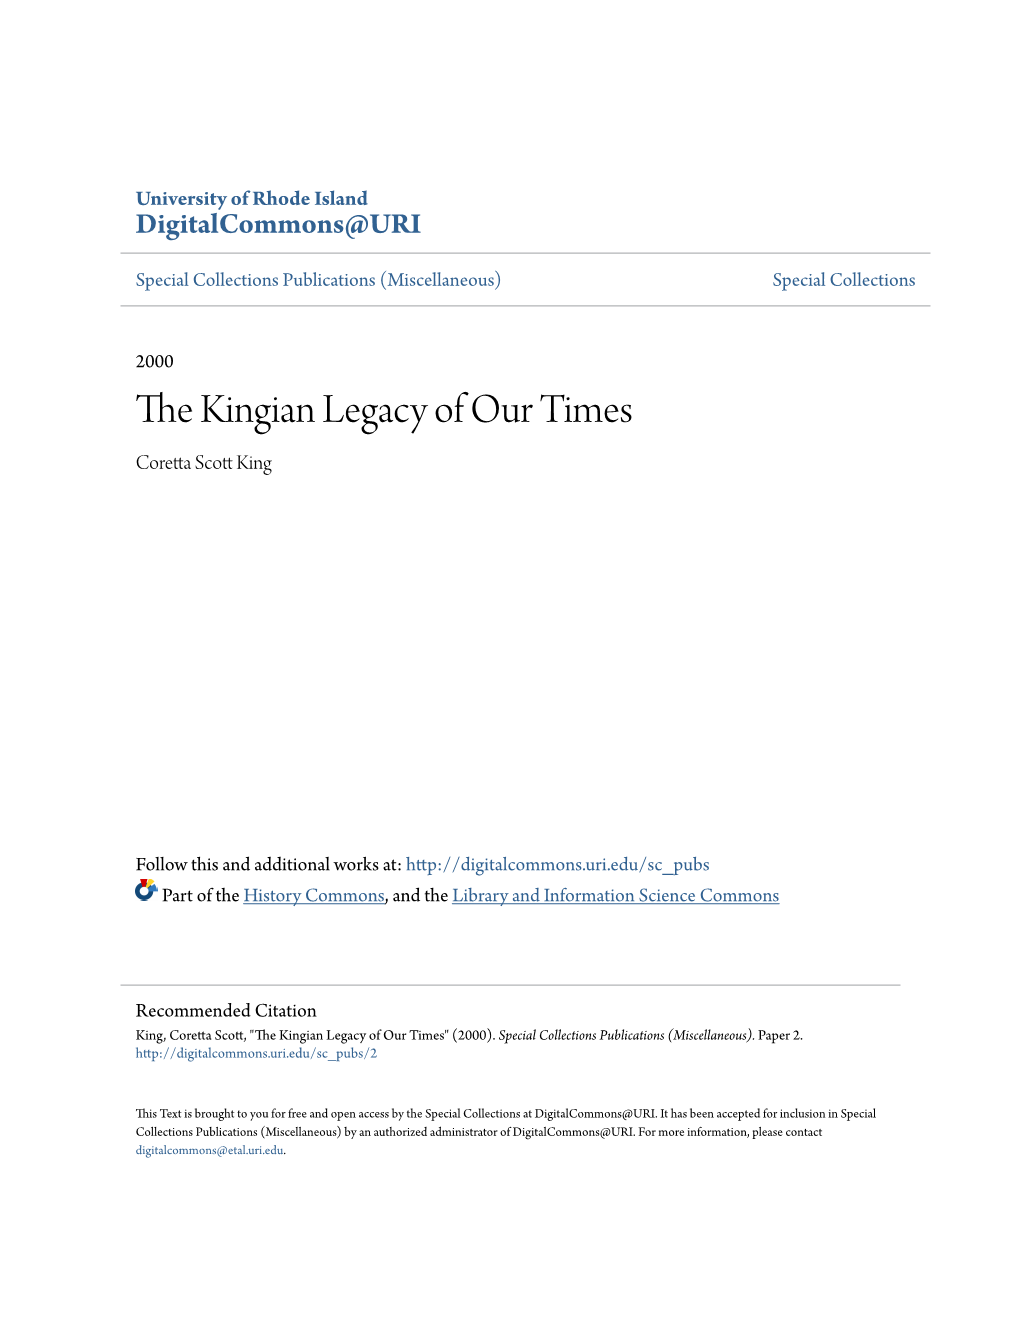 The Kingian Legacy of Our Times Coretta Scott King